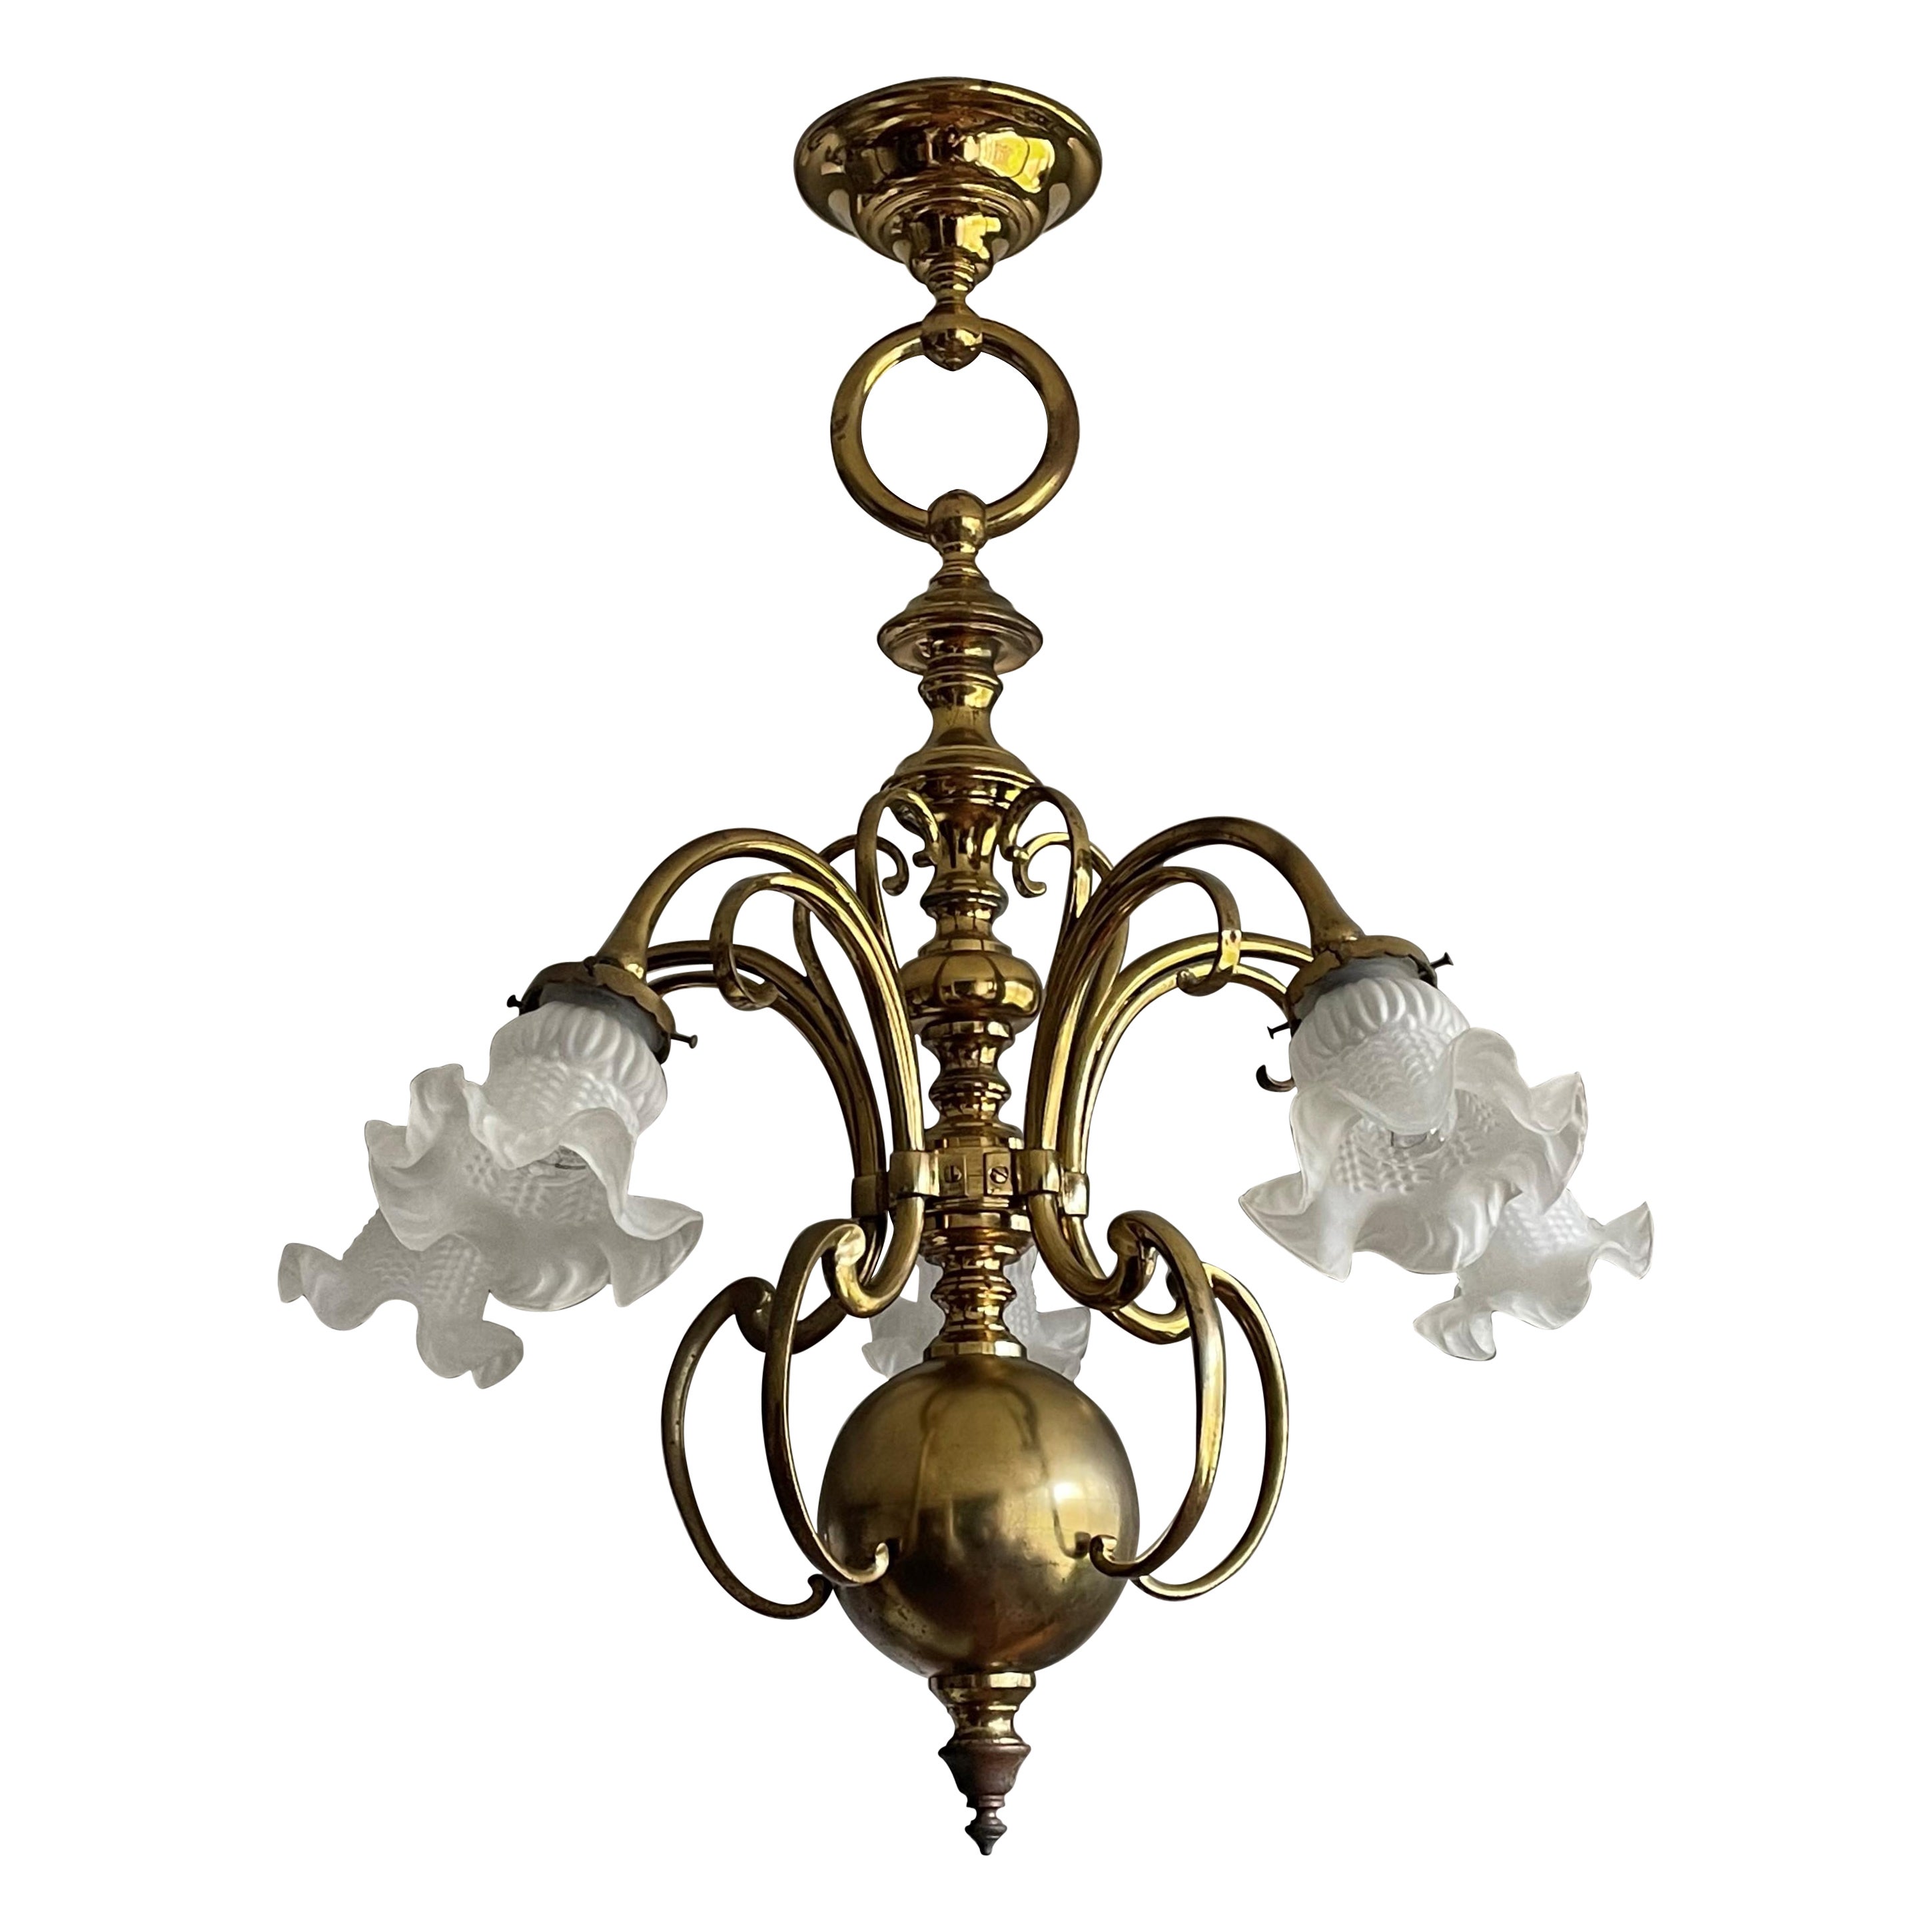 Elegant & Super Stylish Bronze & Brass Art Nouveau Chandelier w. Glass Shades